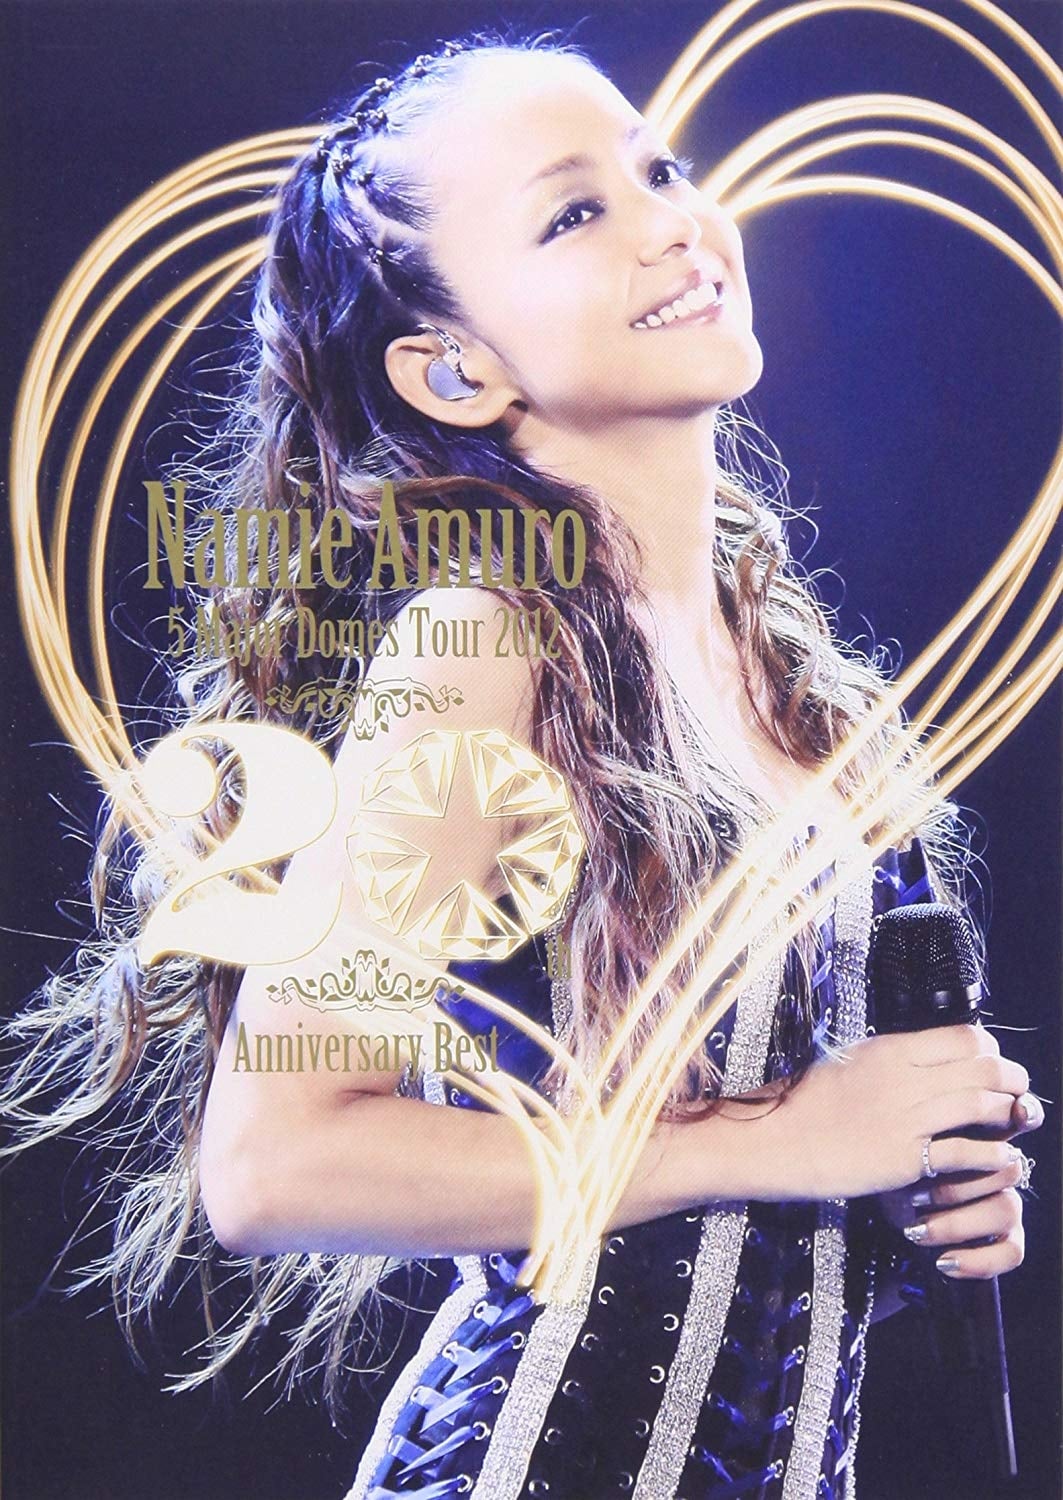 Namie Amuro 5 Major Domes Tour 2012 ~20th Anniversary Best~